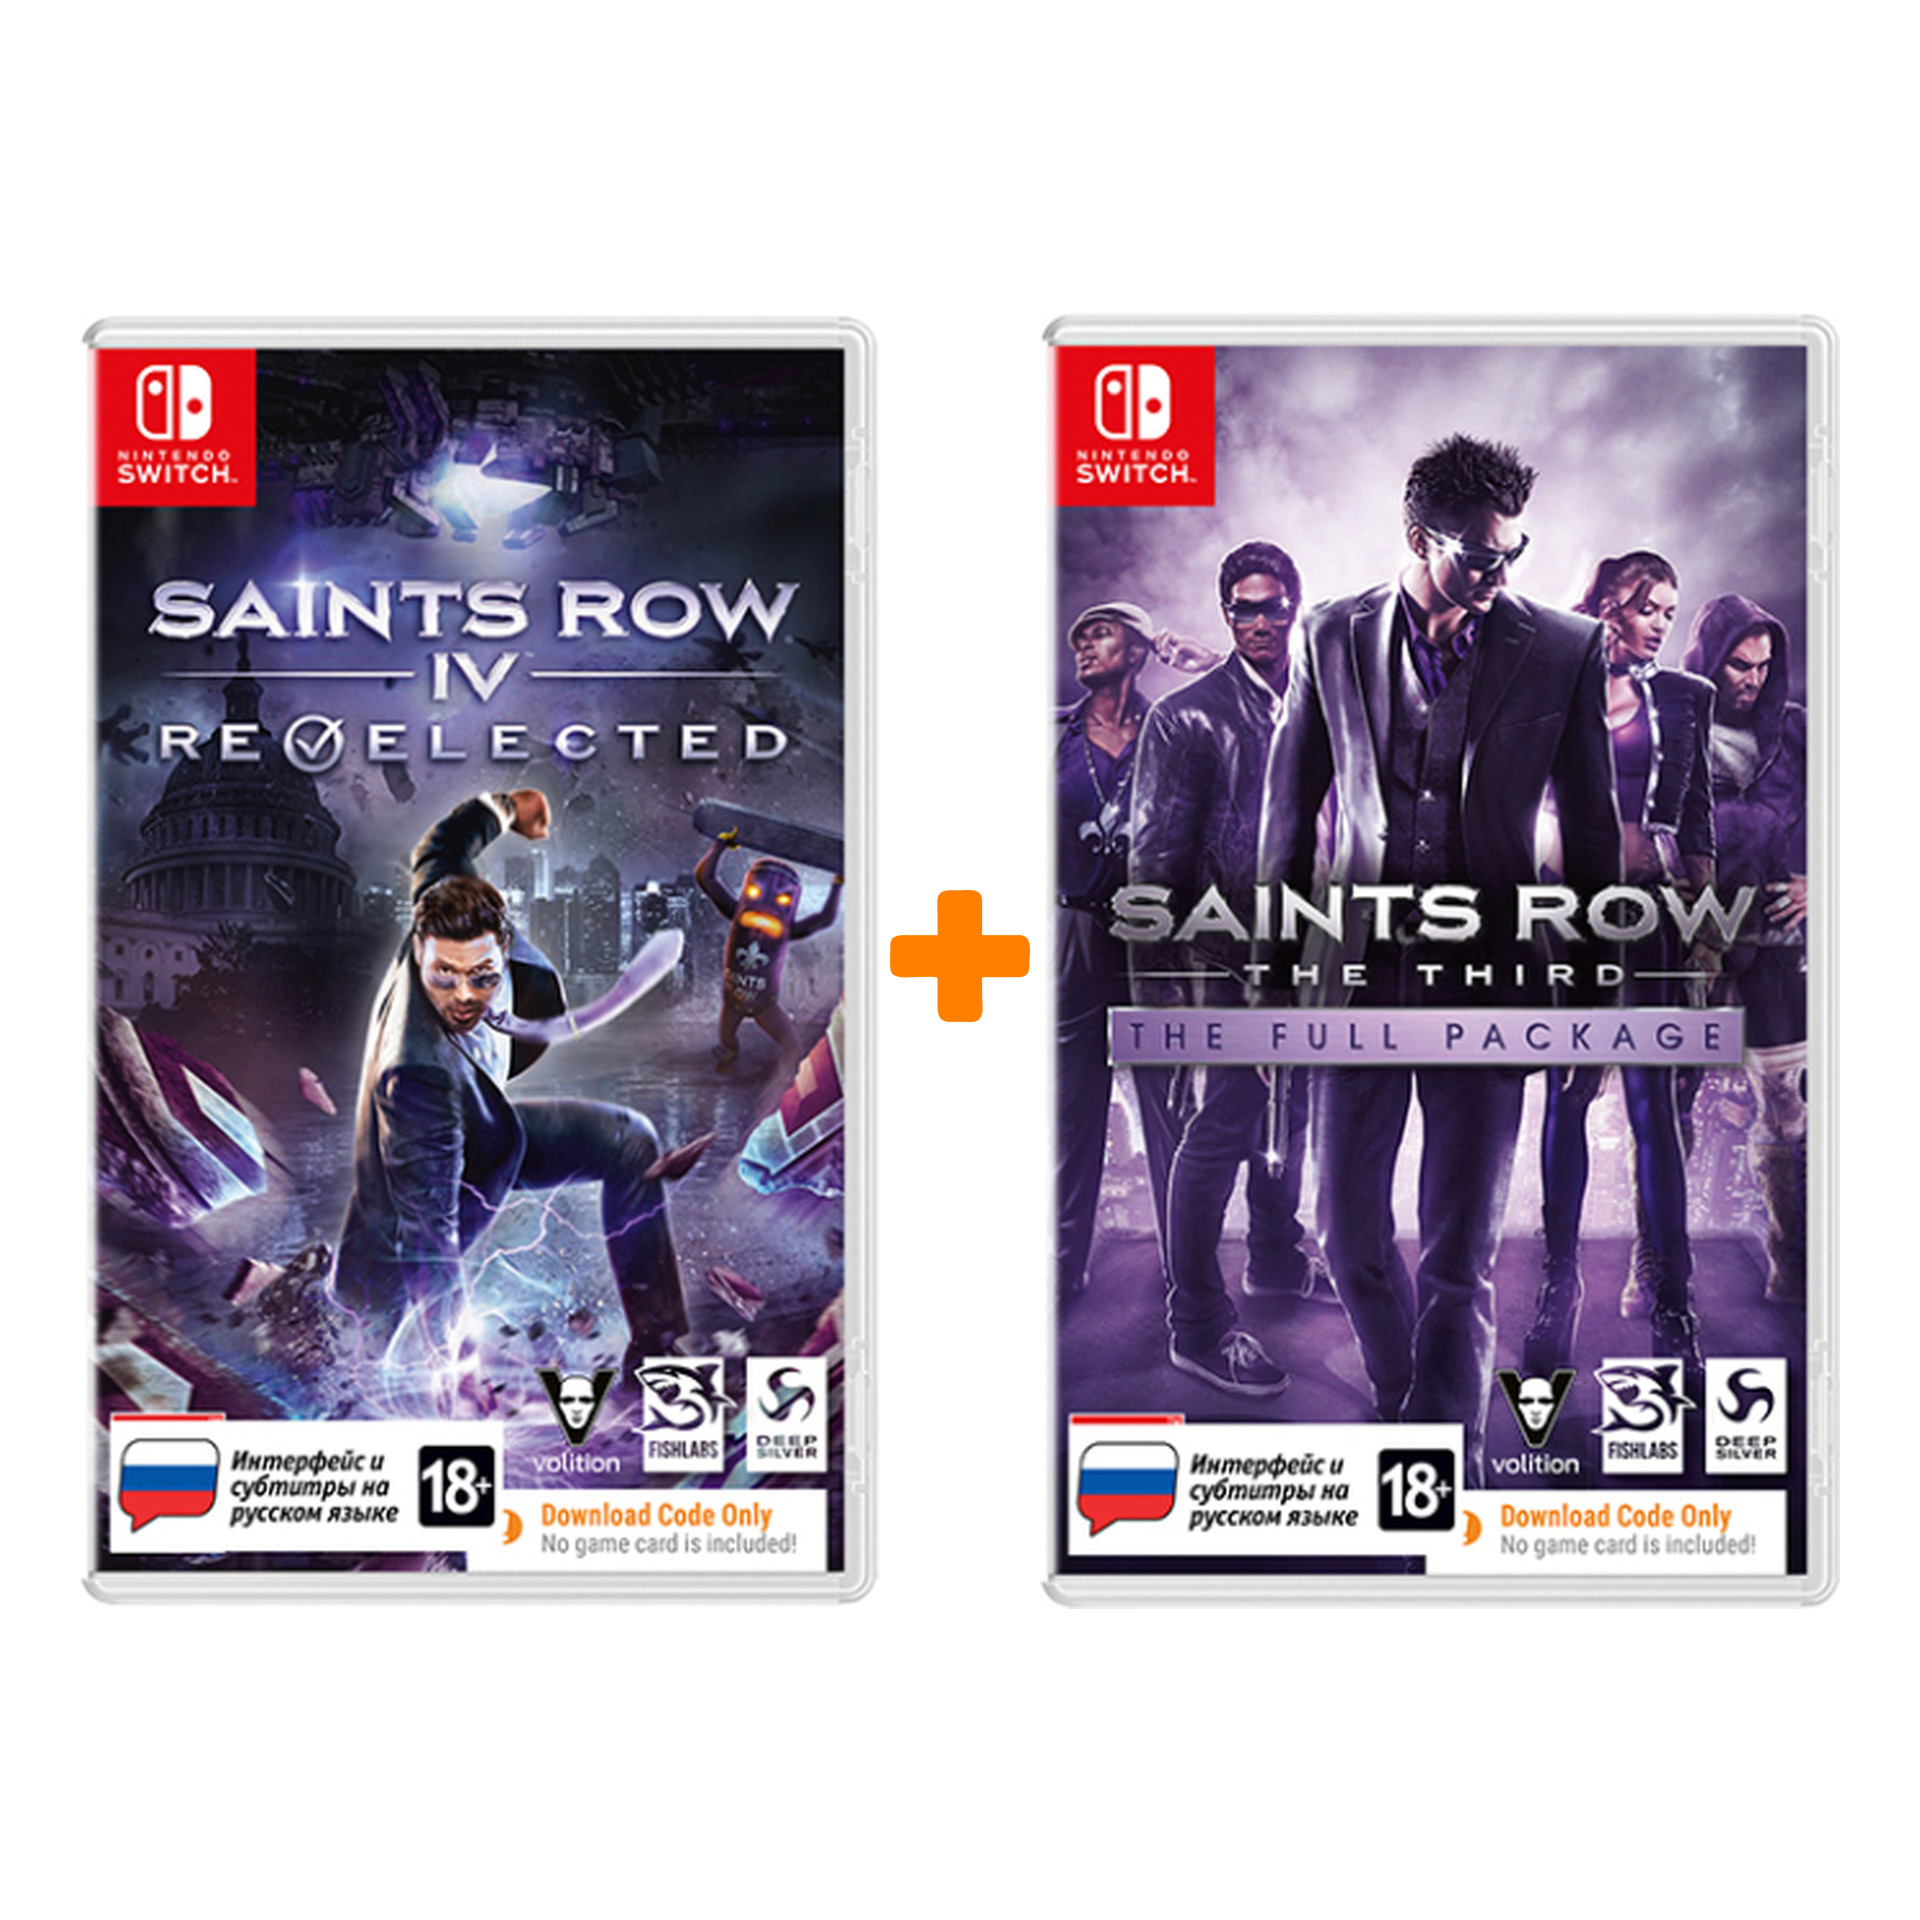 Saints Row: The Third. The Full Package. Код загрузки, без картриджа [Nintendo Switch] + Saints Row IV. Re-elected. Код загрузки, без картриджа [Nintendo Switch, русские субтитры] – Набор